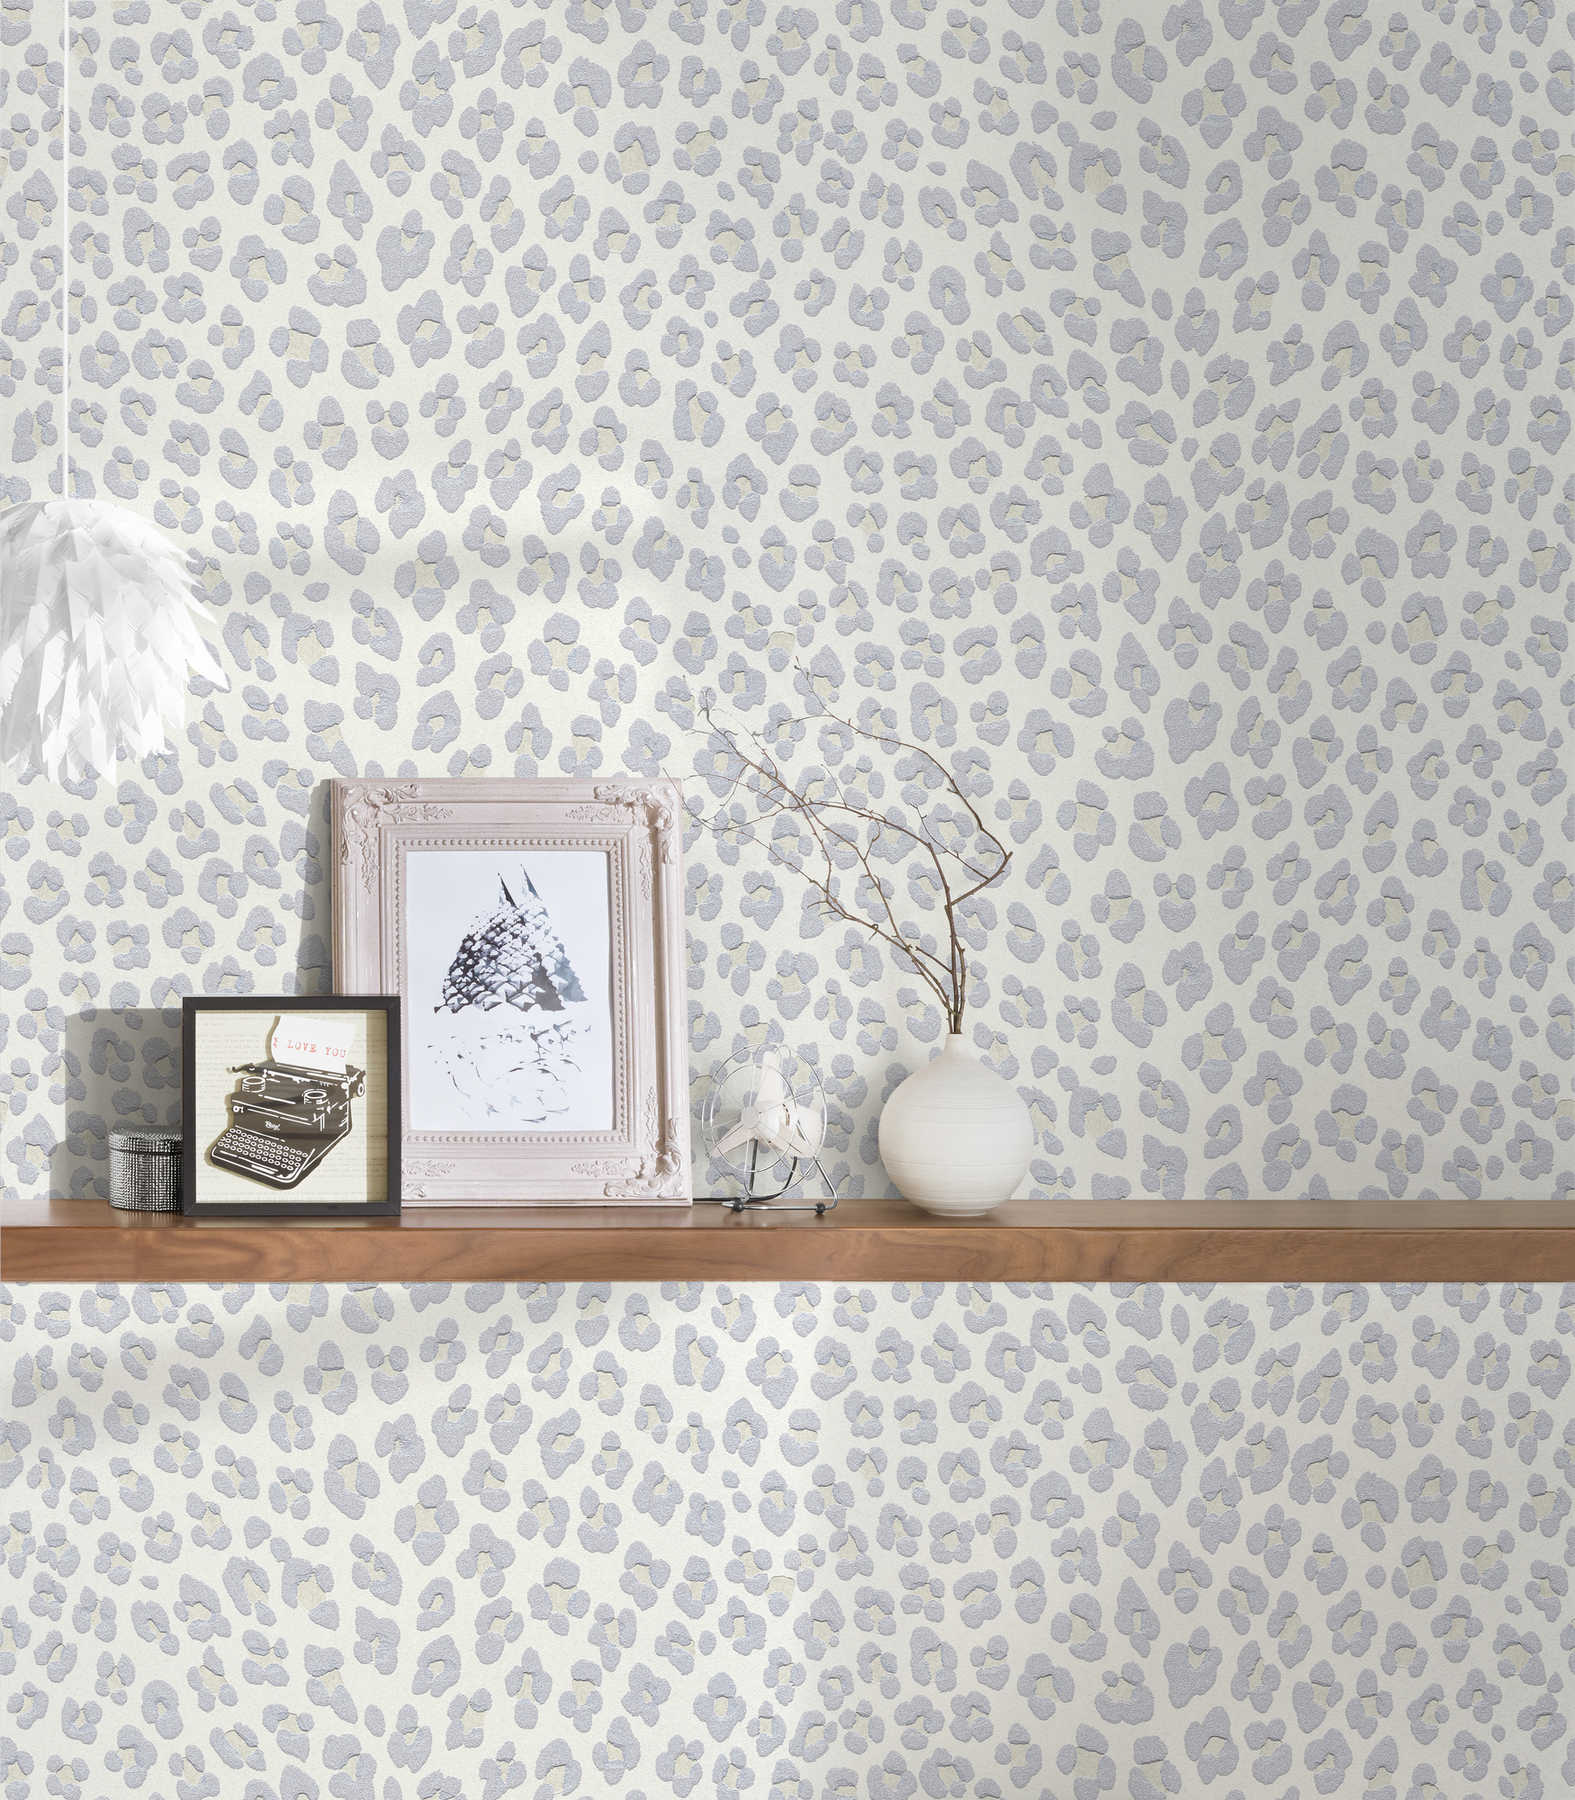             Wallpaper animal print leopard with metallic accent - cream
        